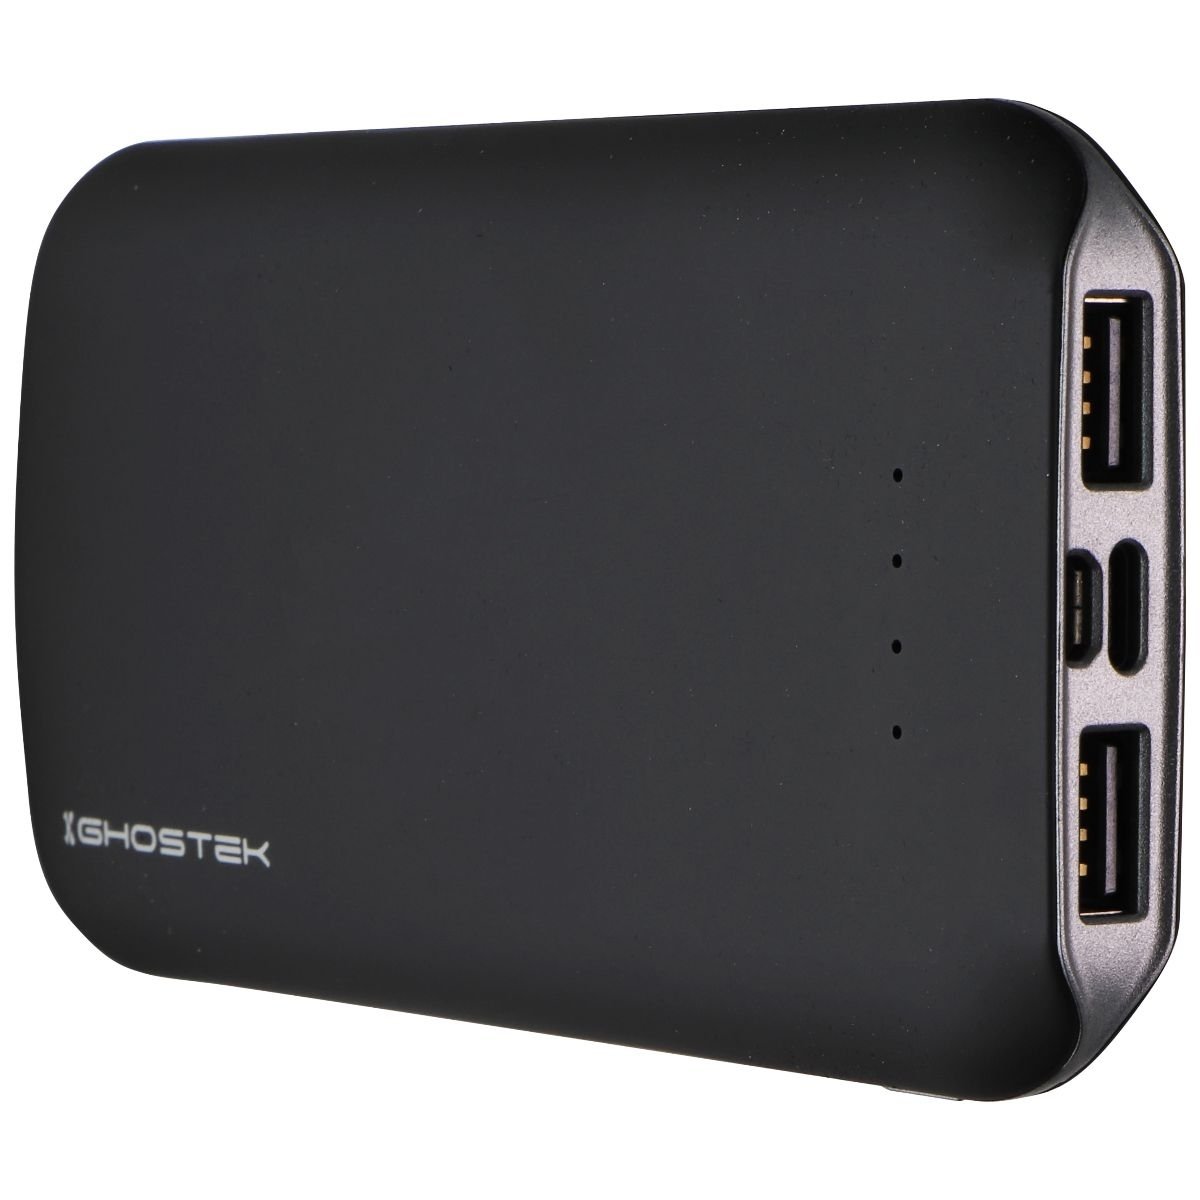 Ghostek Life NRGpak+ (10,000mAh) Portable Dual USB Power Bank - Black